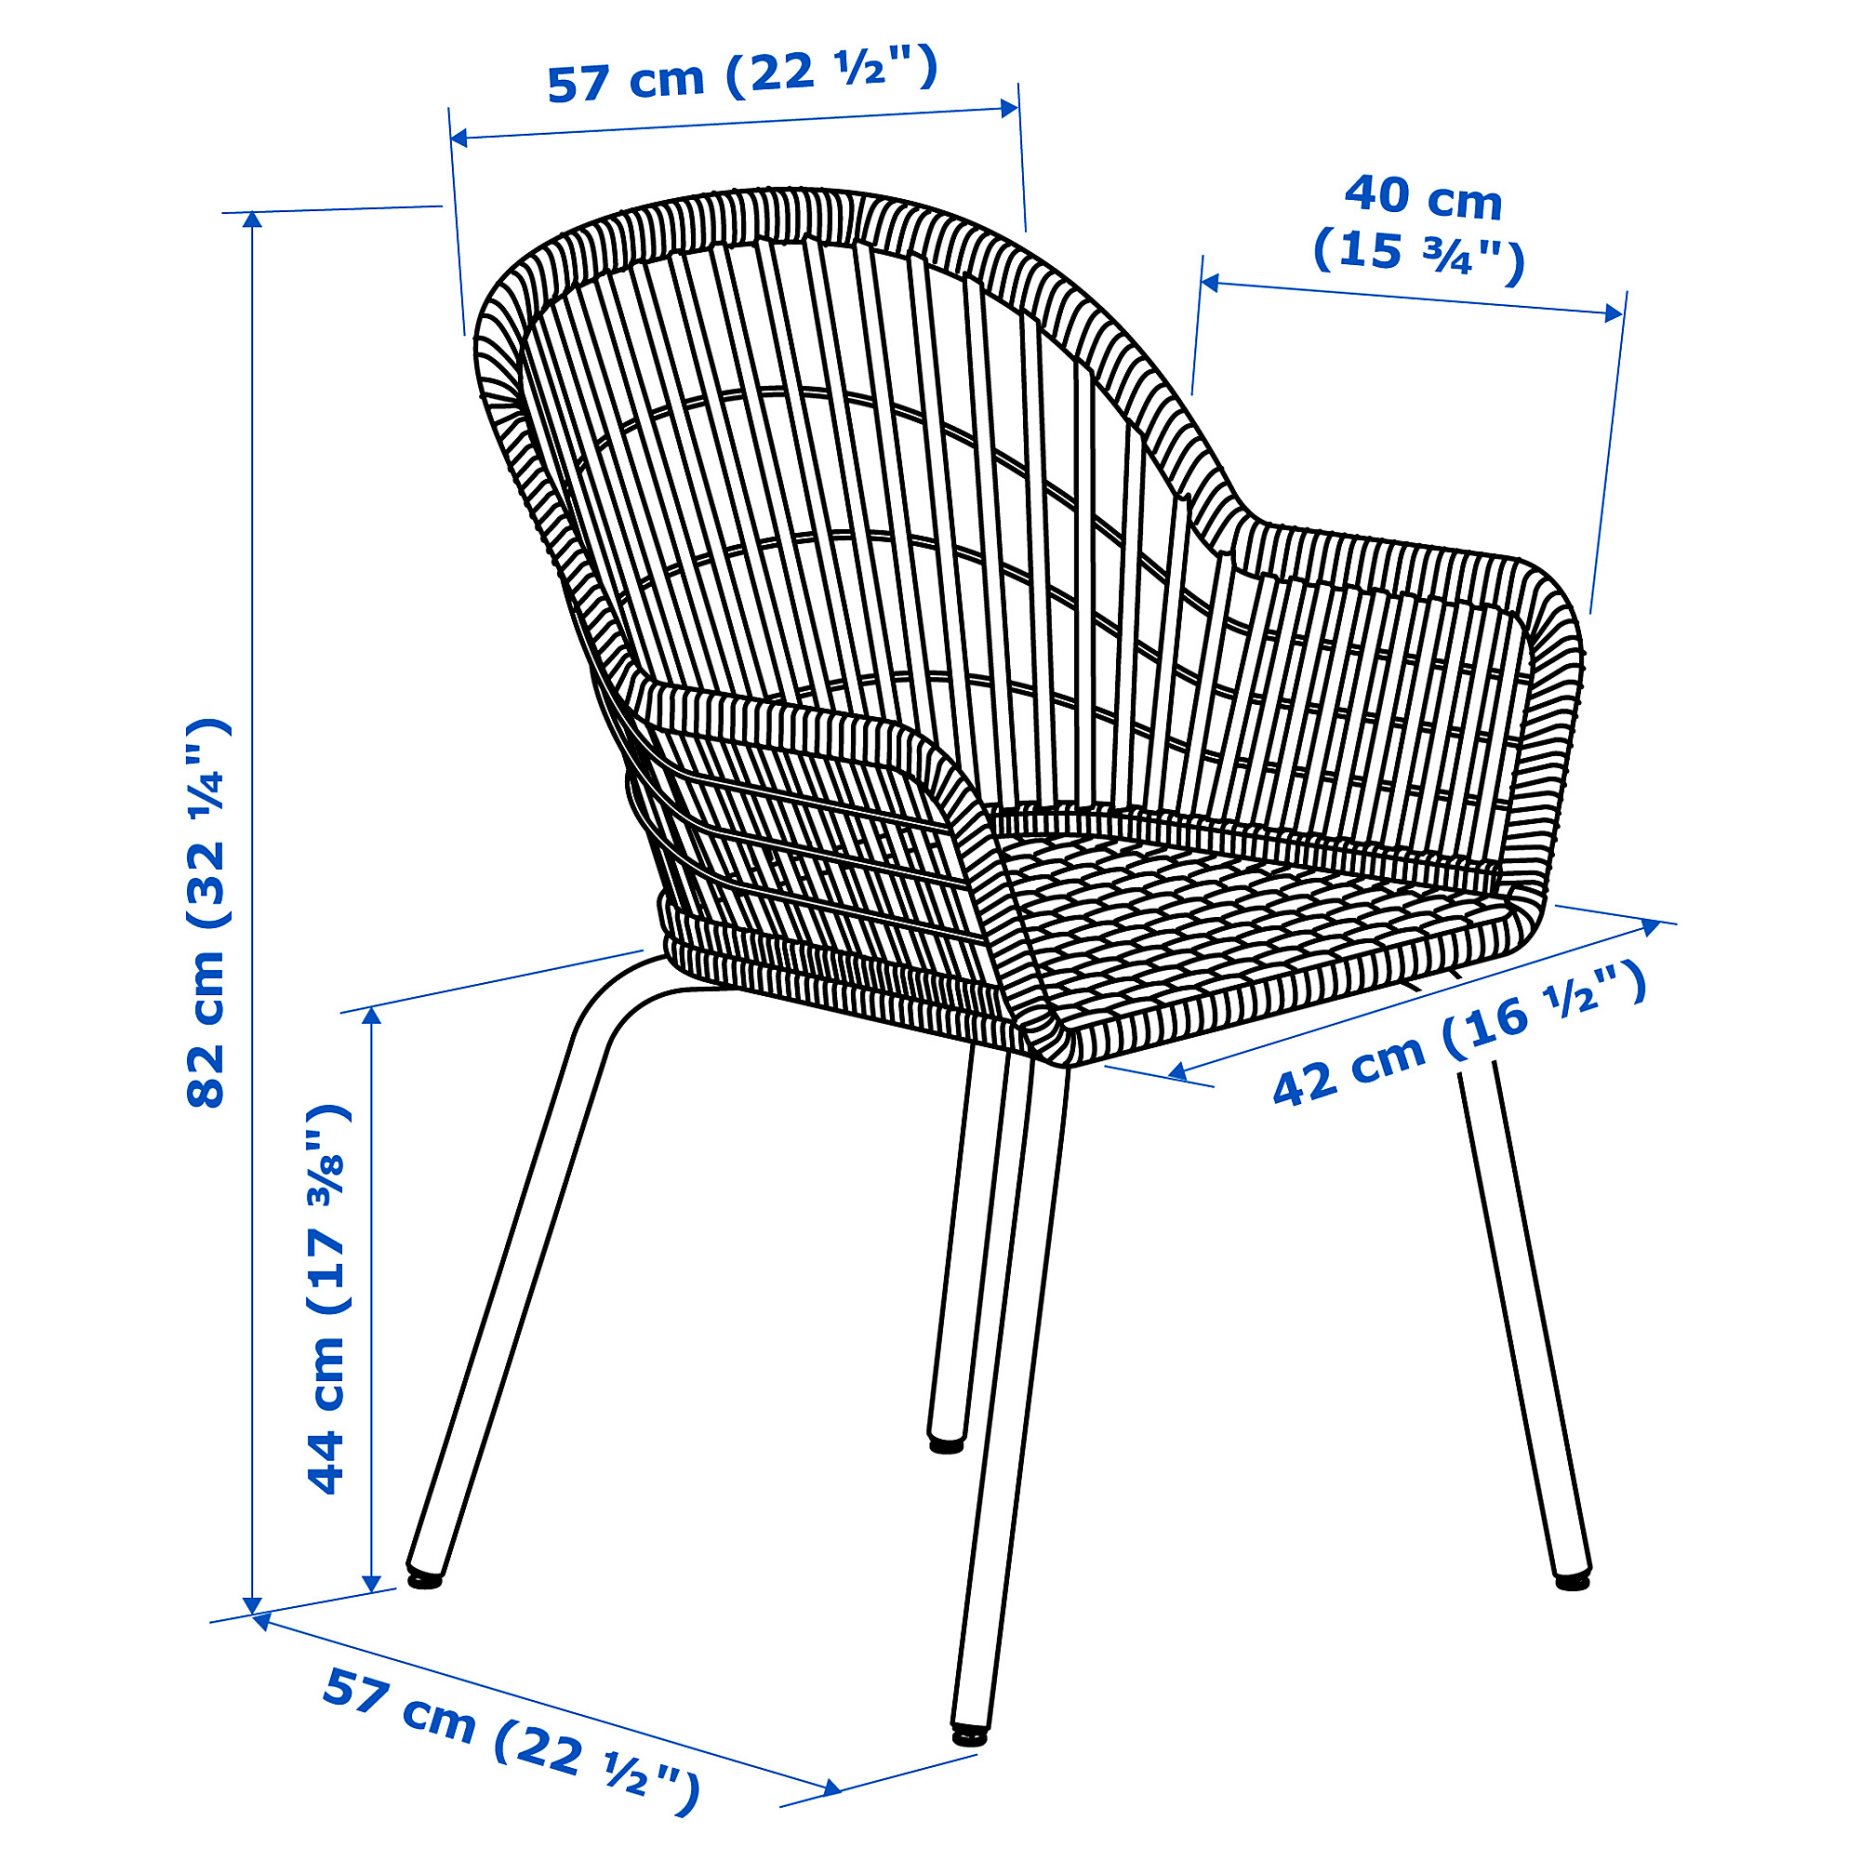 NILSOVE/NORNA, καρέκλα με μπράτσα και μαξιλαράκι, 193.040.06